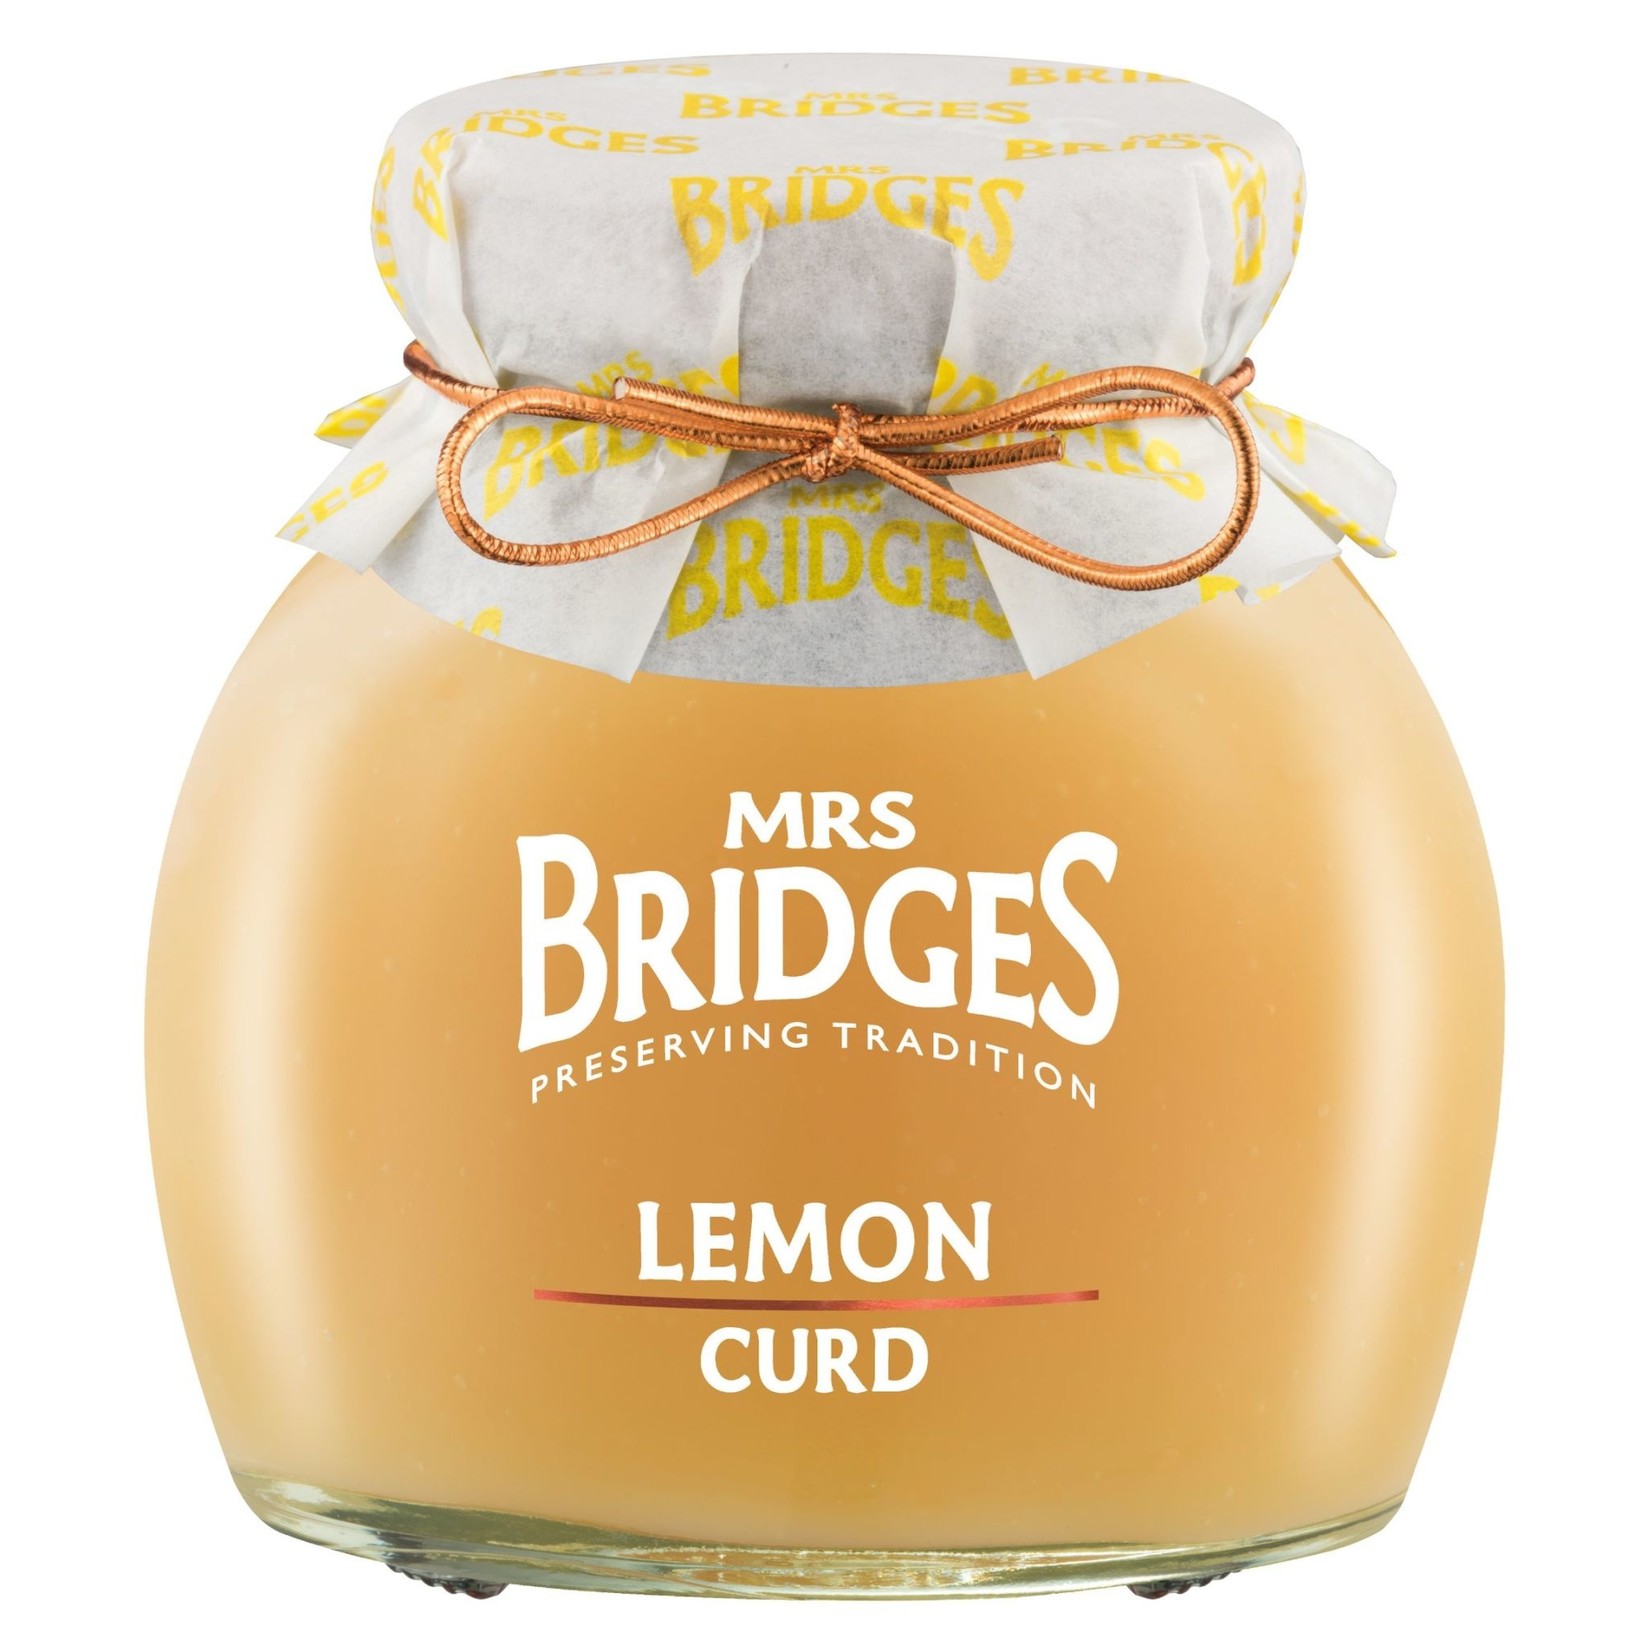 MRS BRIDGES MRS BRIDGES Lemon Curd 340g